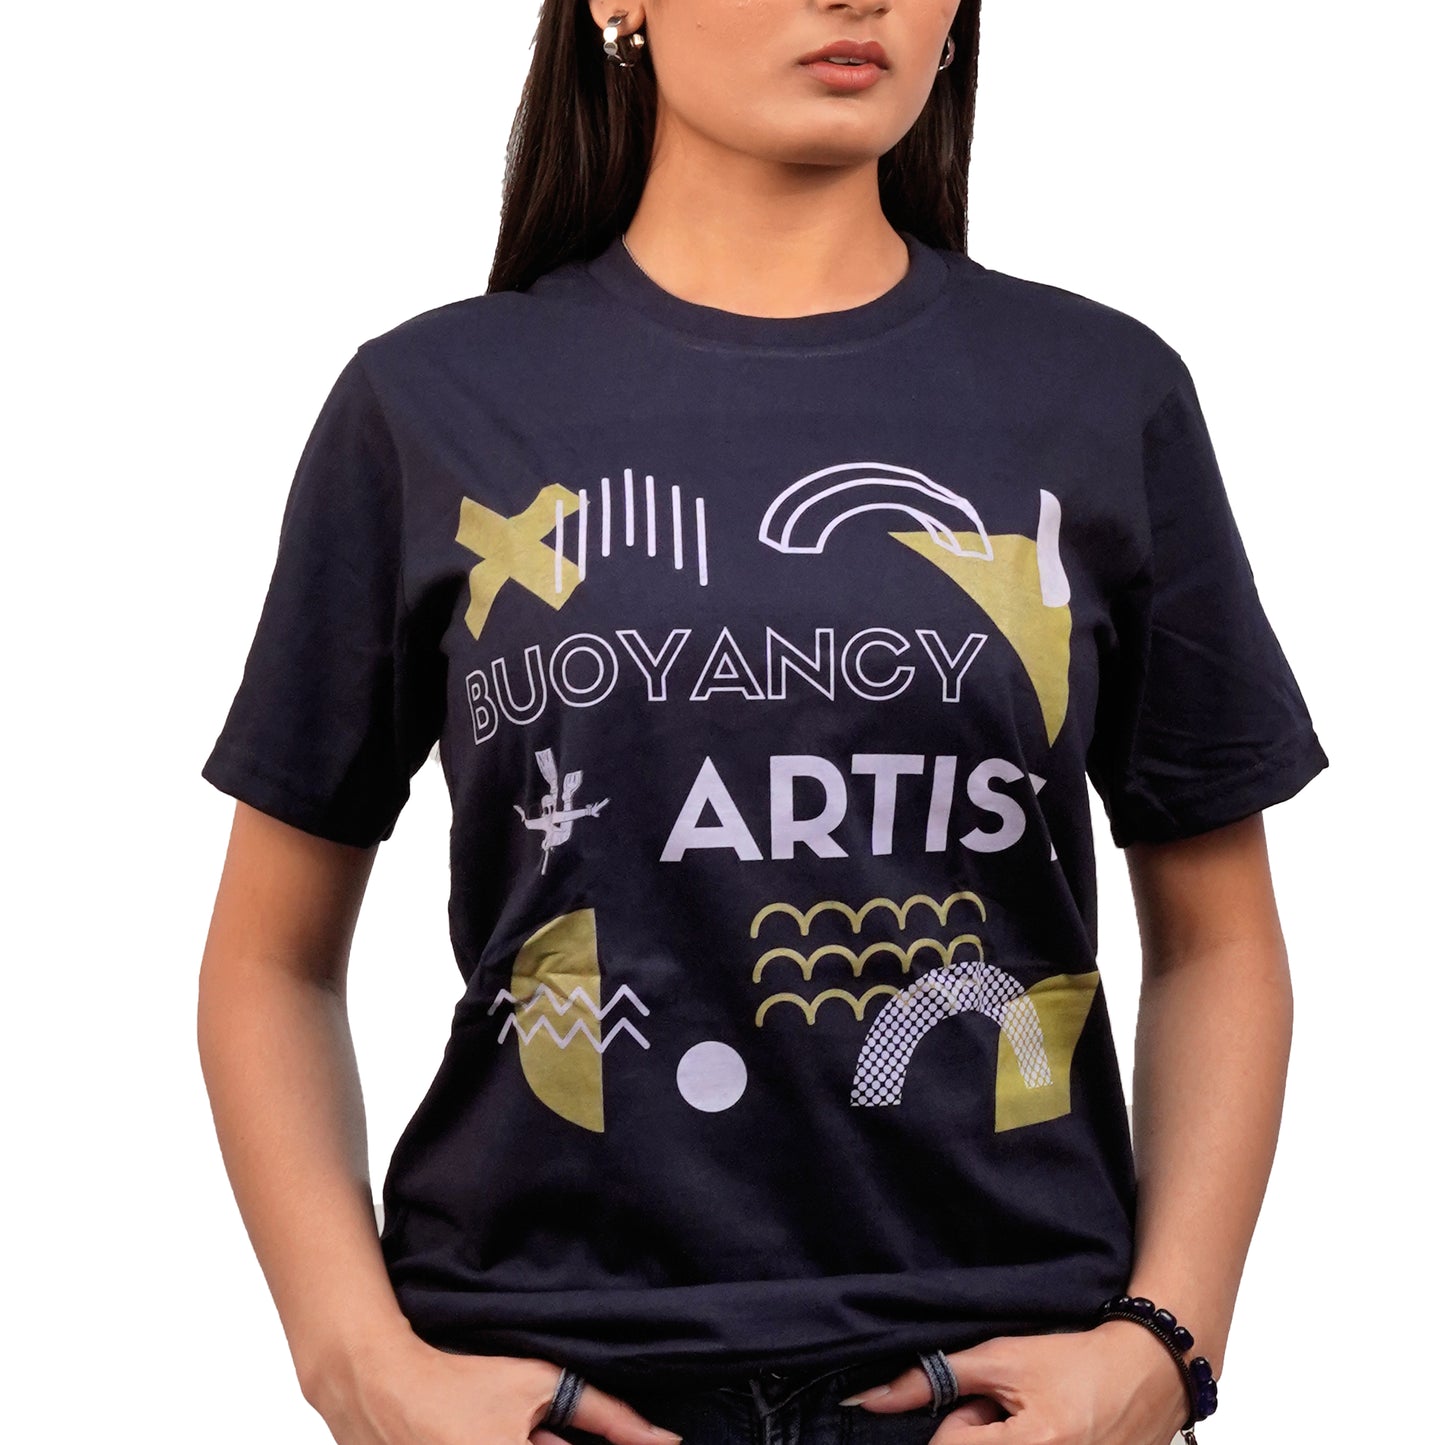 Buoyancy Artist T-shirt In Navy Blue Color For Women